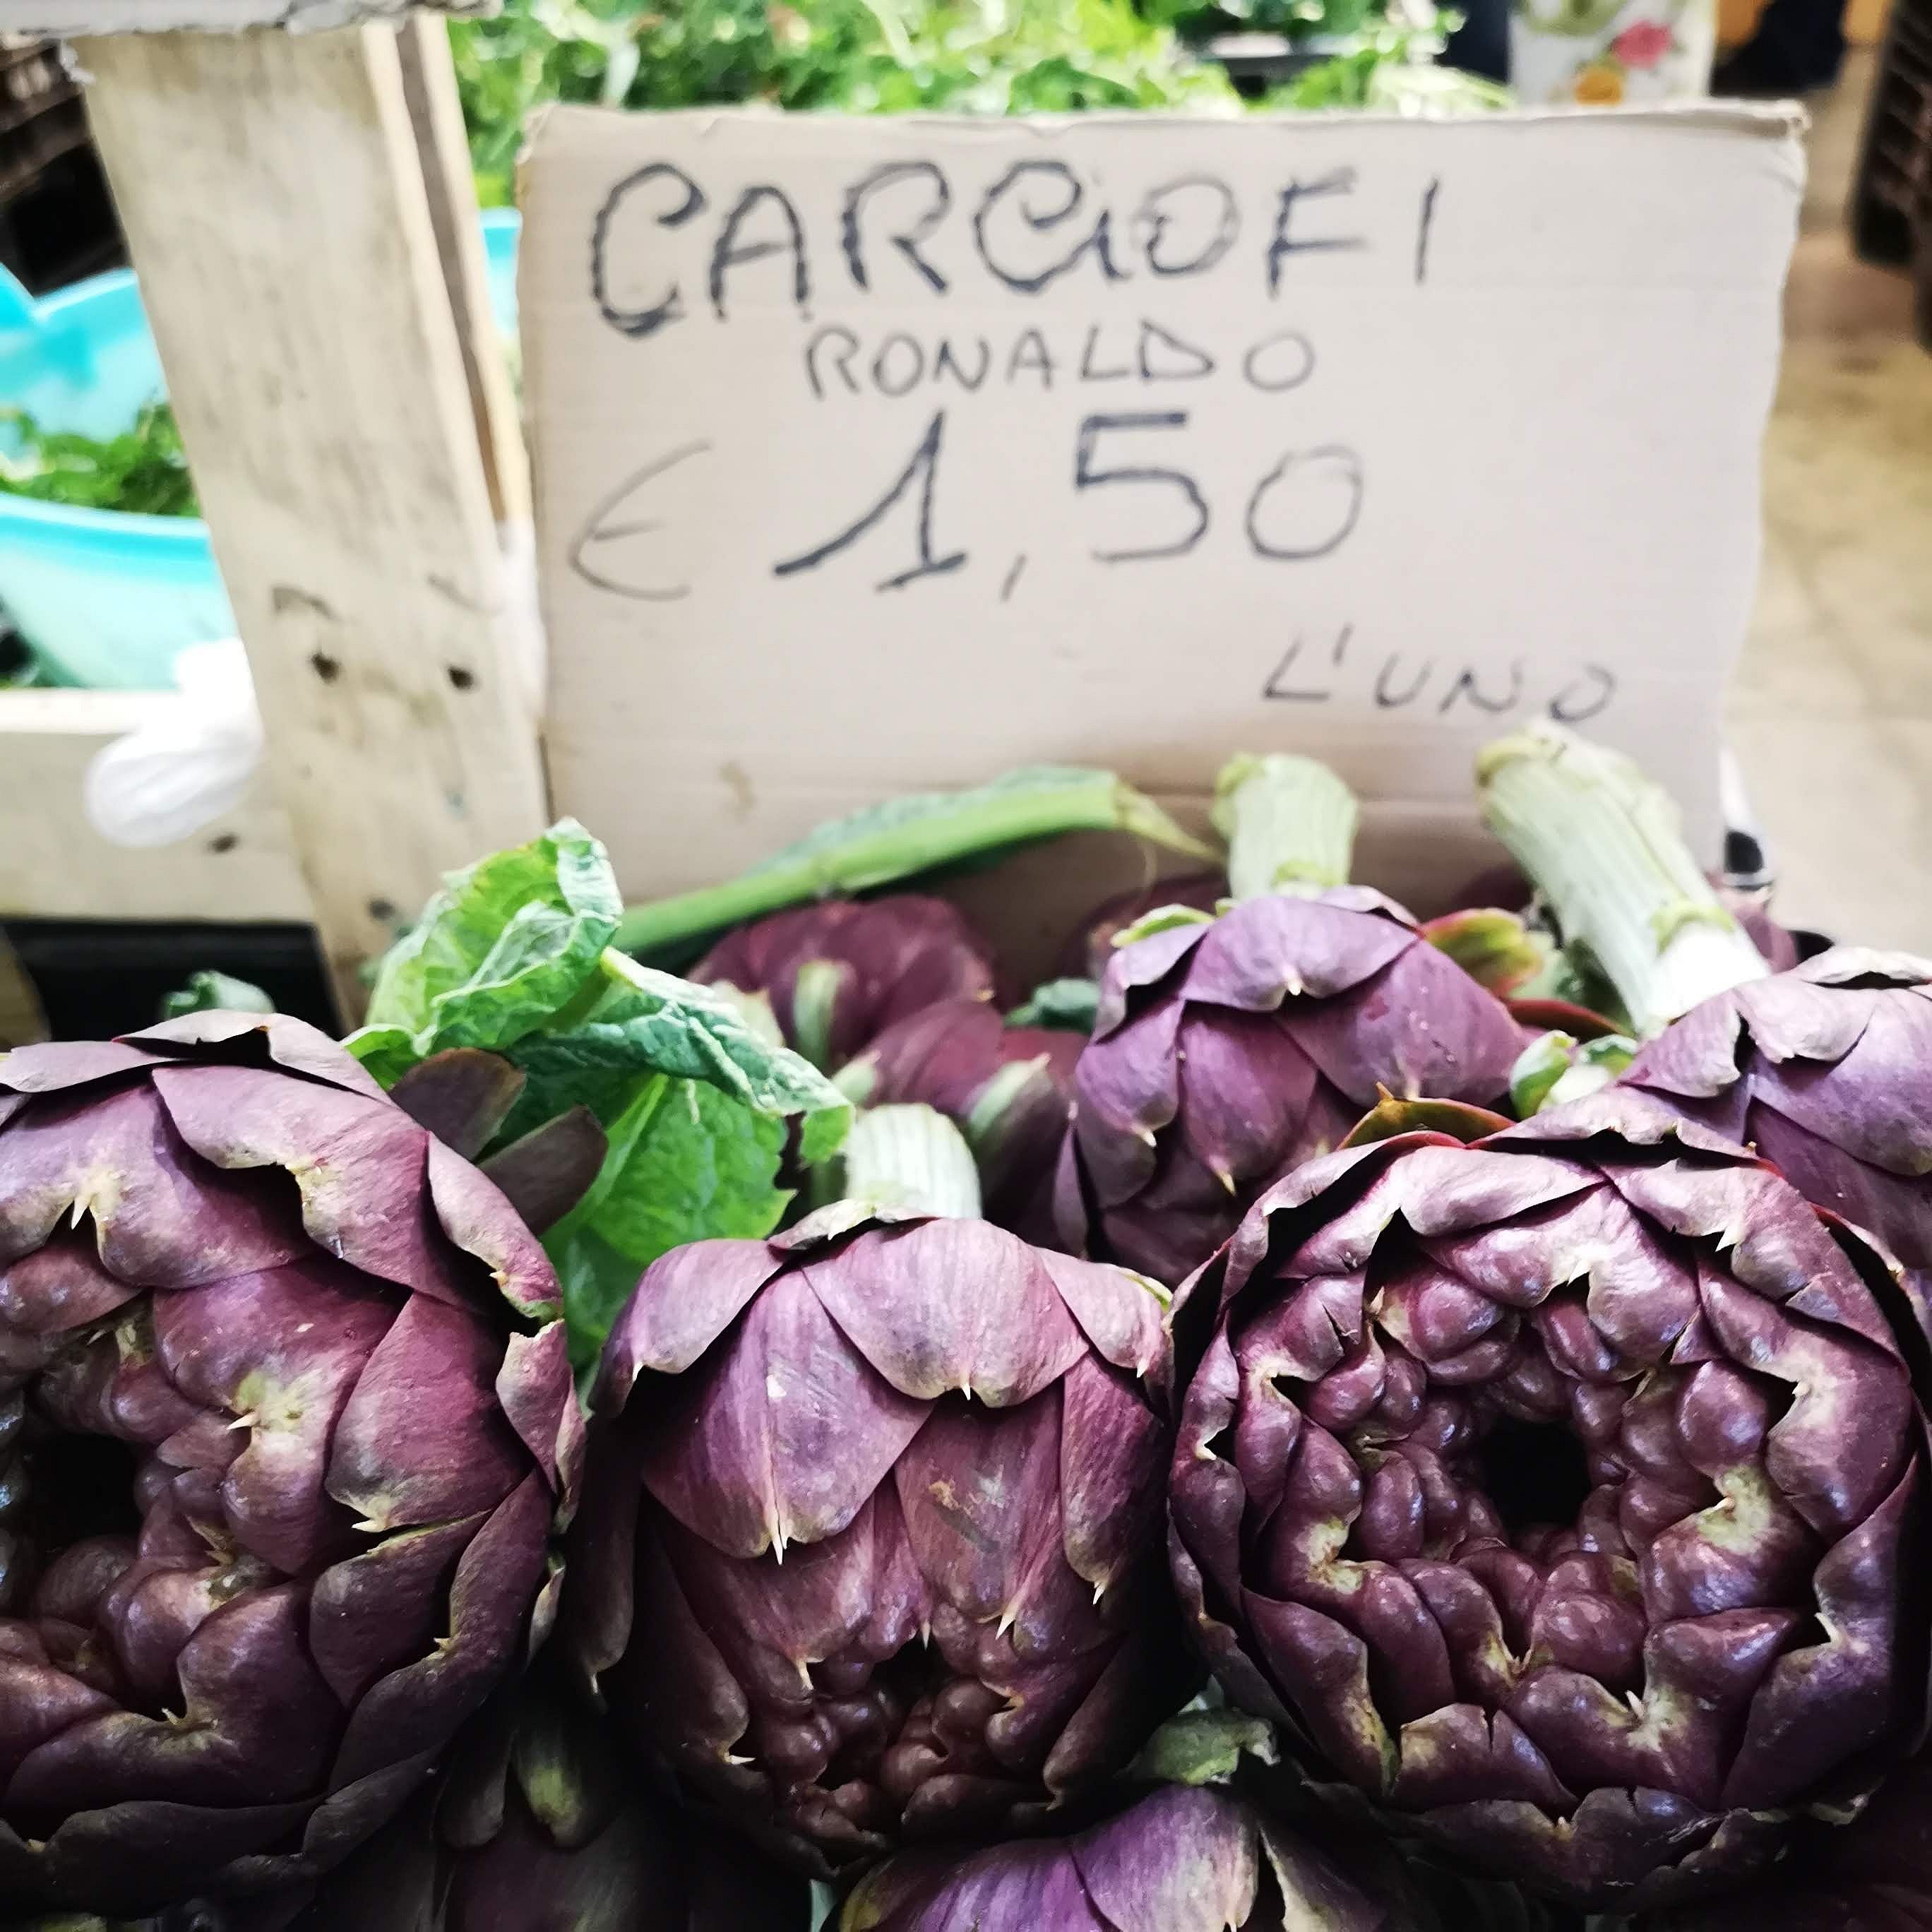 Farmer's Market Garbatella